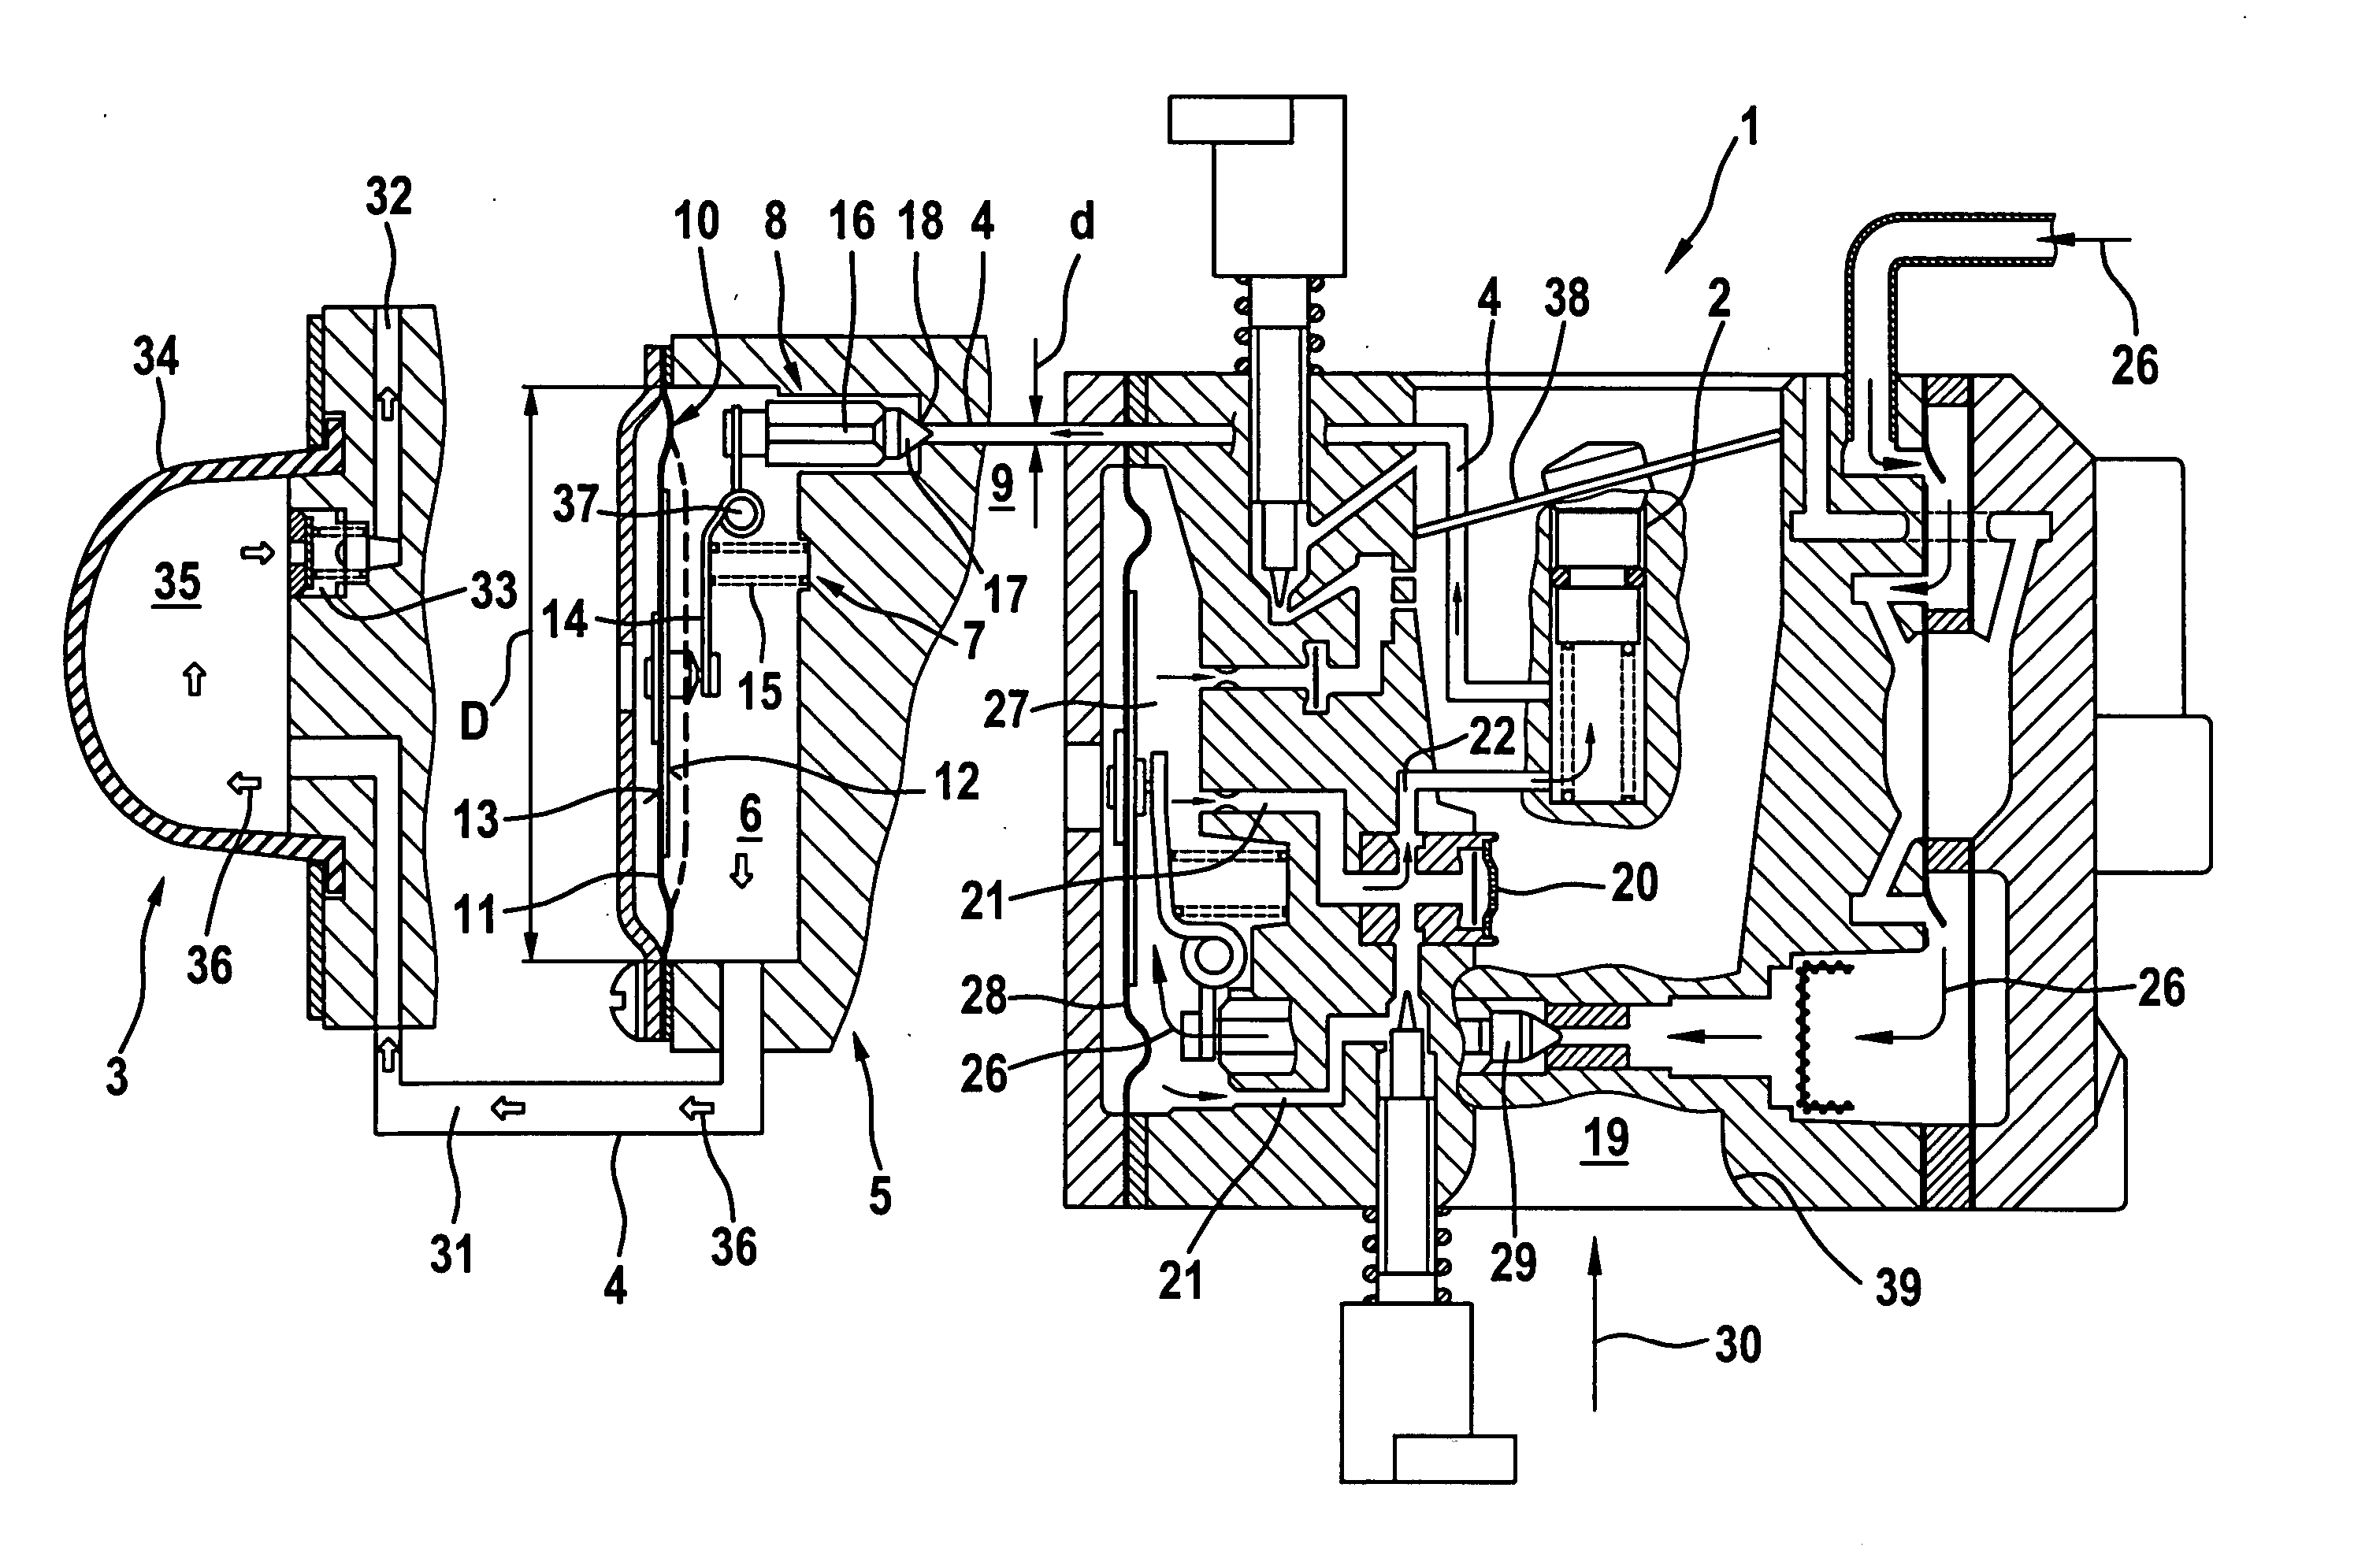 Carburetor arrangement of a portable handheld work apparatus